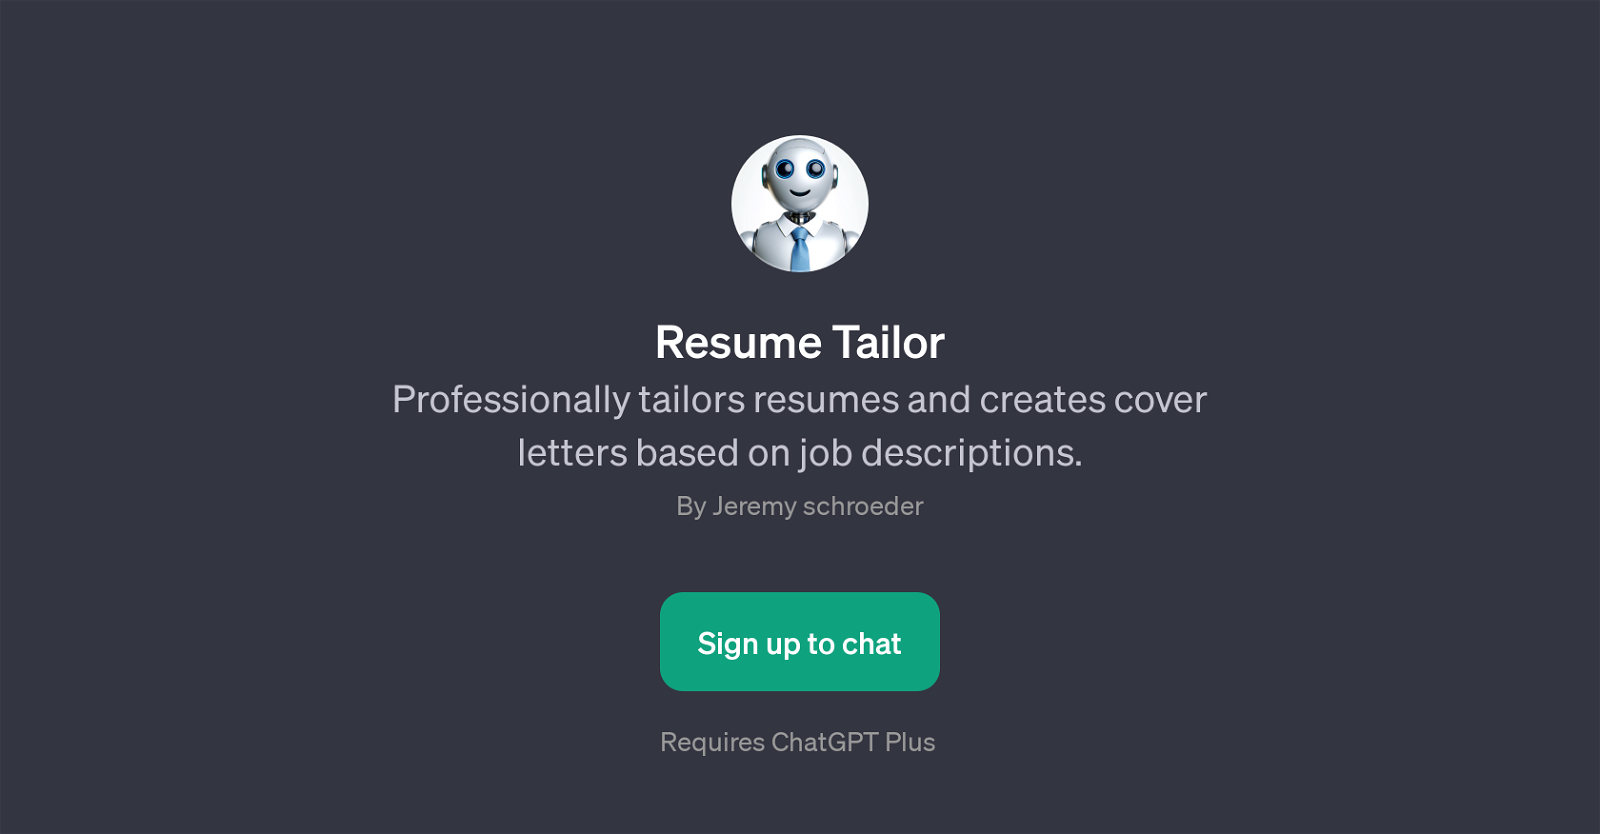 Resume Tailor website